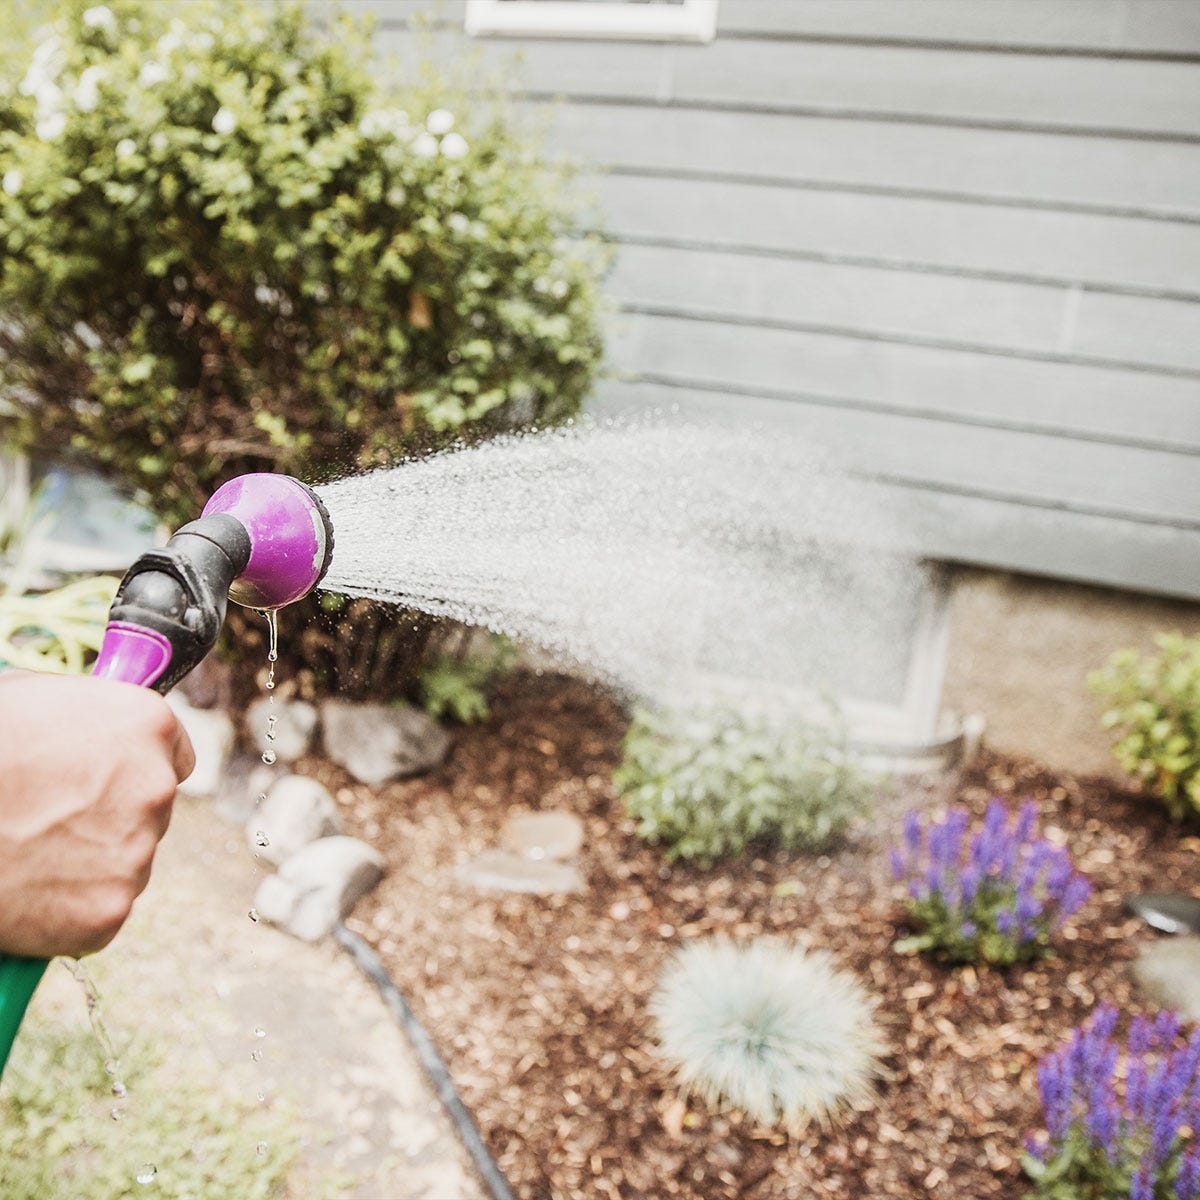 Tips for Watering your Garden